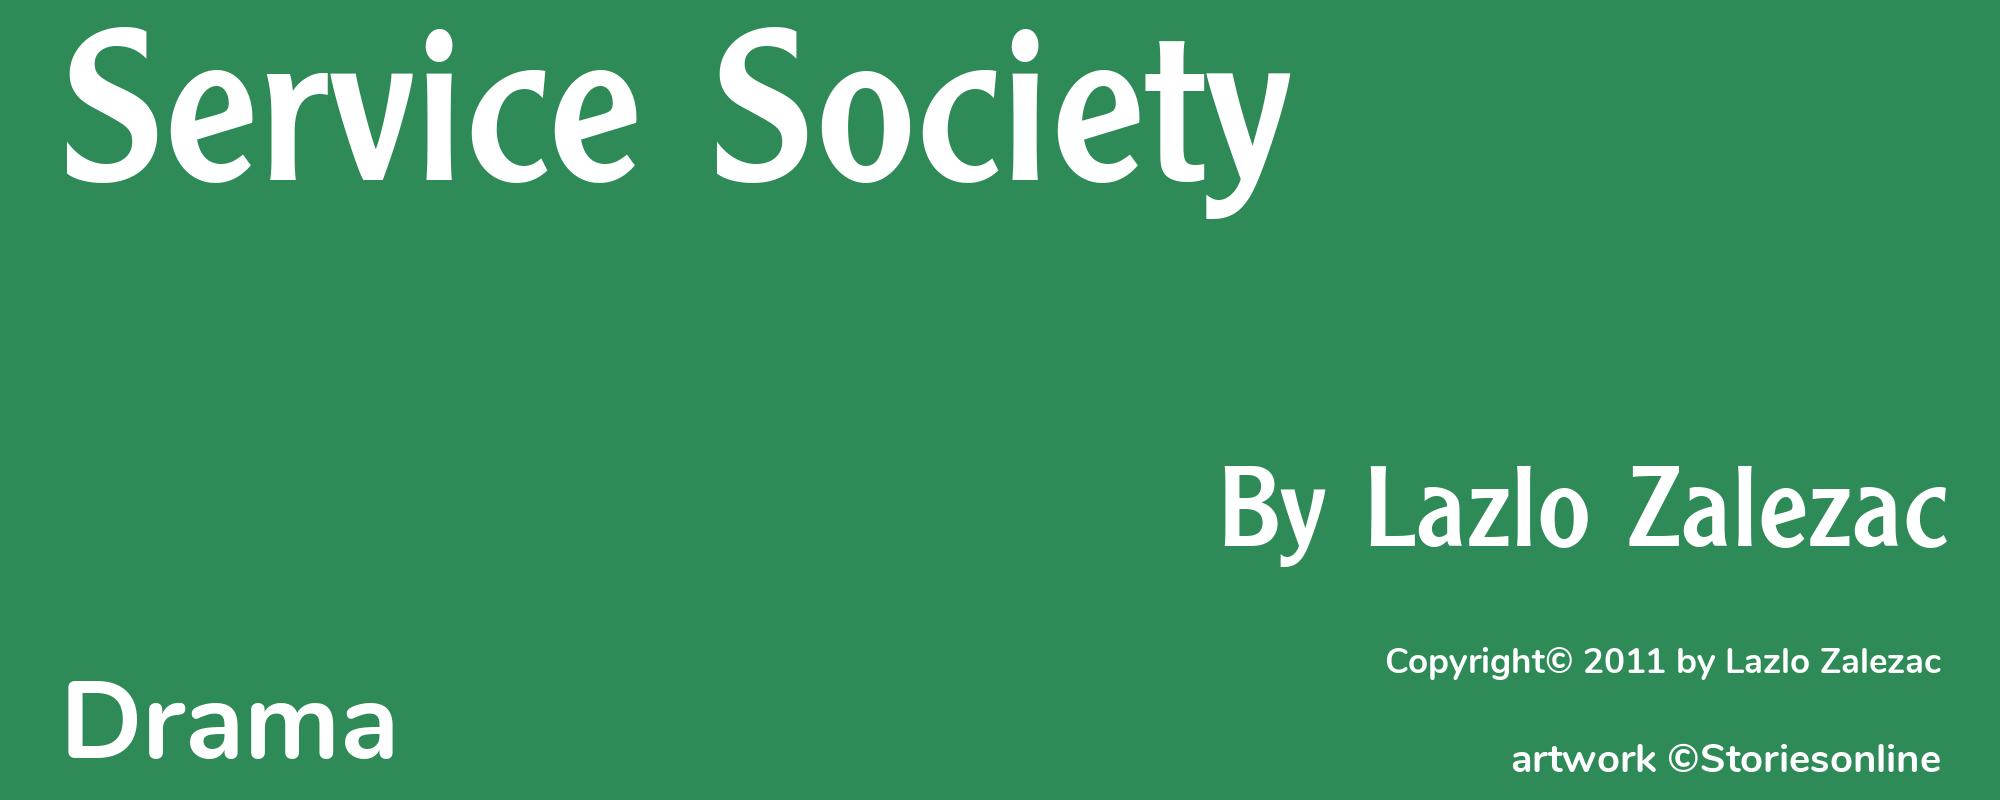 Service Society - Cover